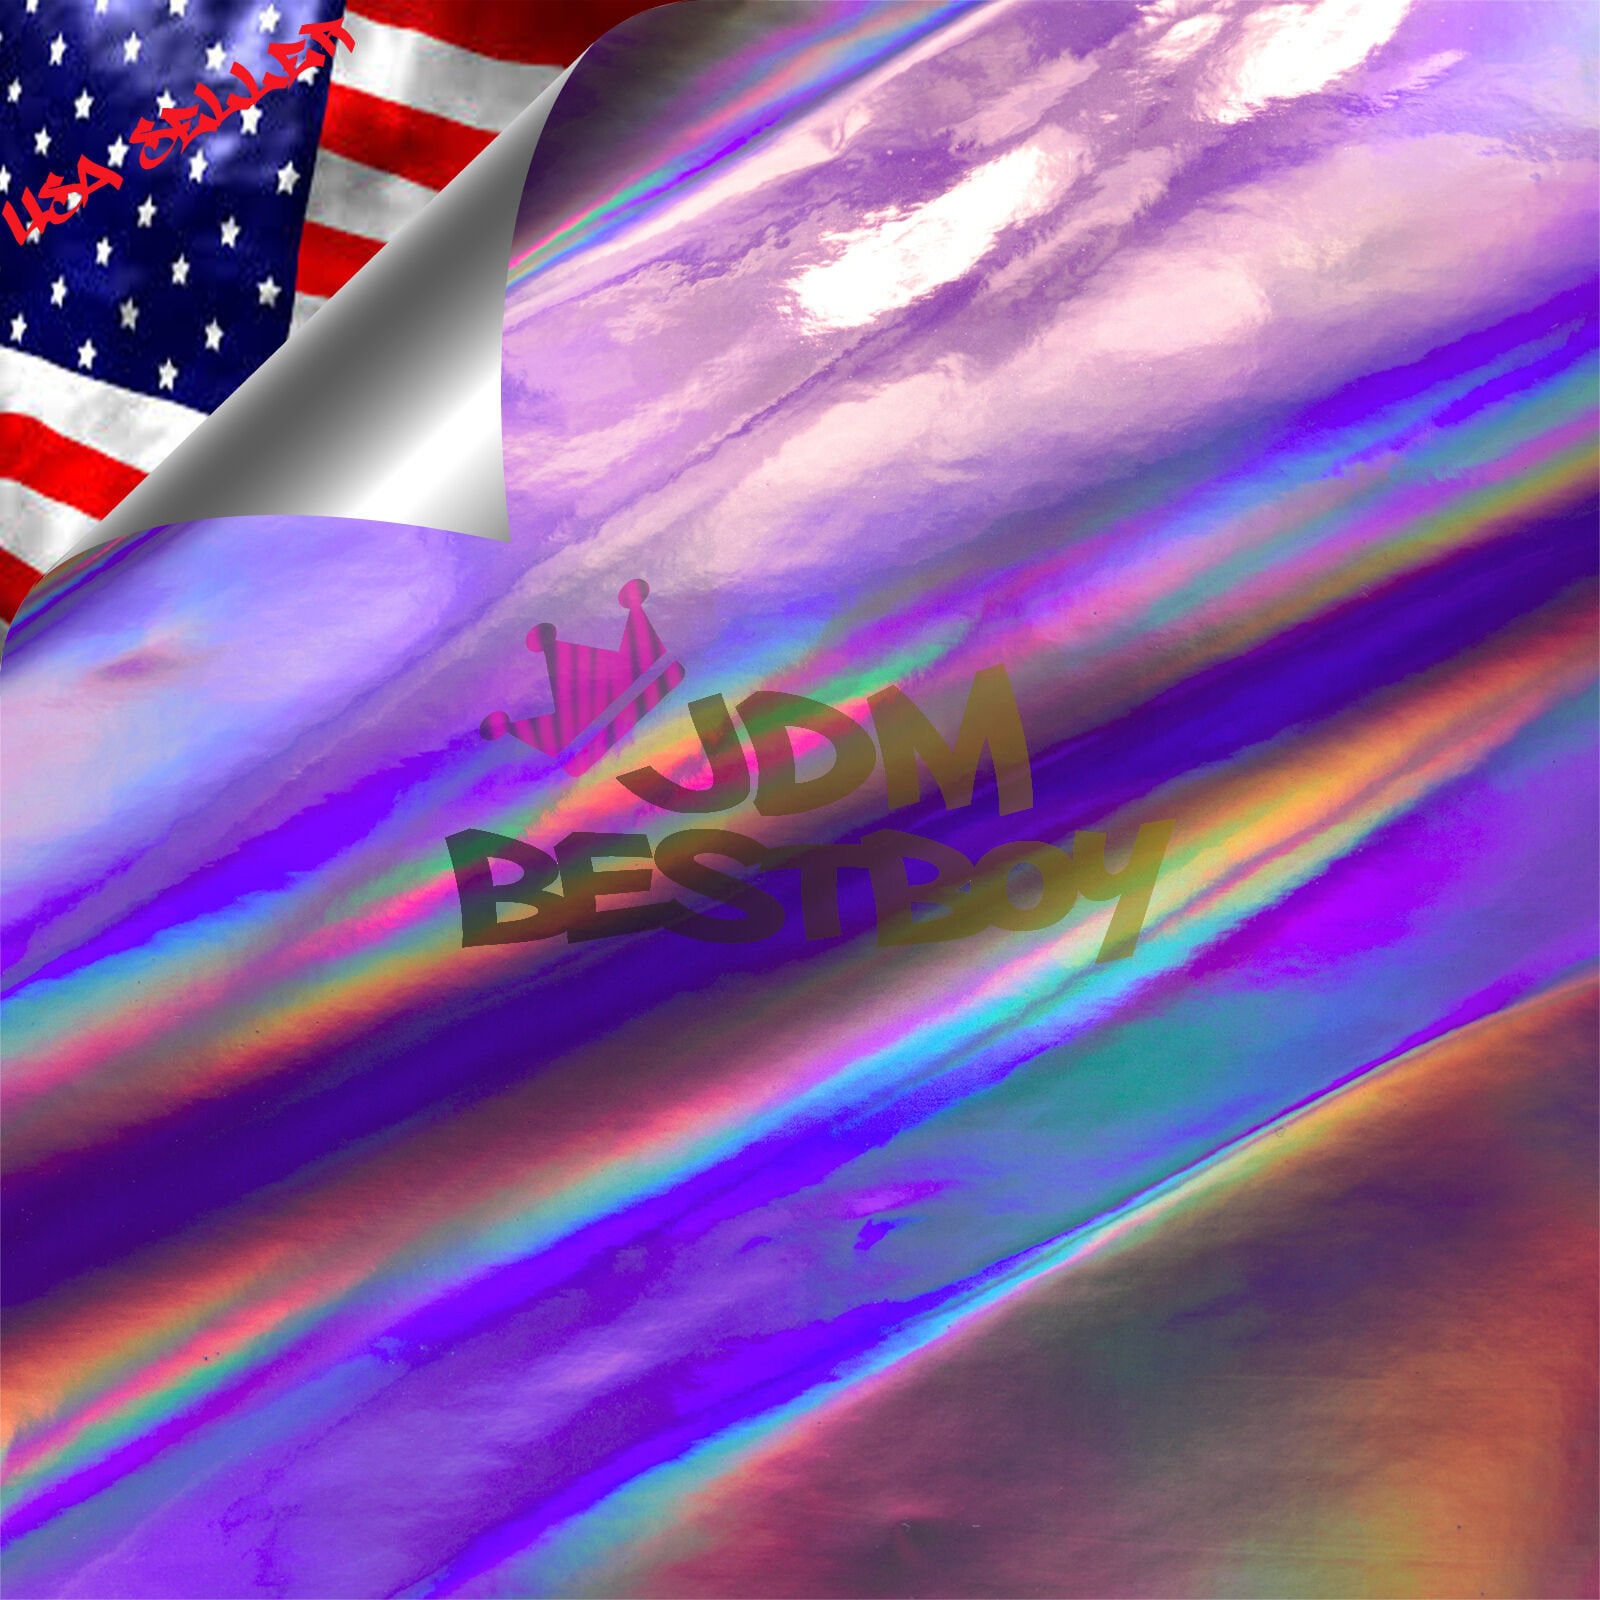 XhuangTech Holographic Rainbow Neo Chrome Car Vinyl Wrap Gloss Air Bubble Free Adhesive Decal Sticker Film Sheet DIY (White, 53 x 29.5 (135cm x 75cm)